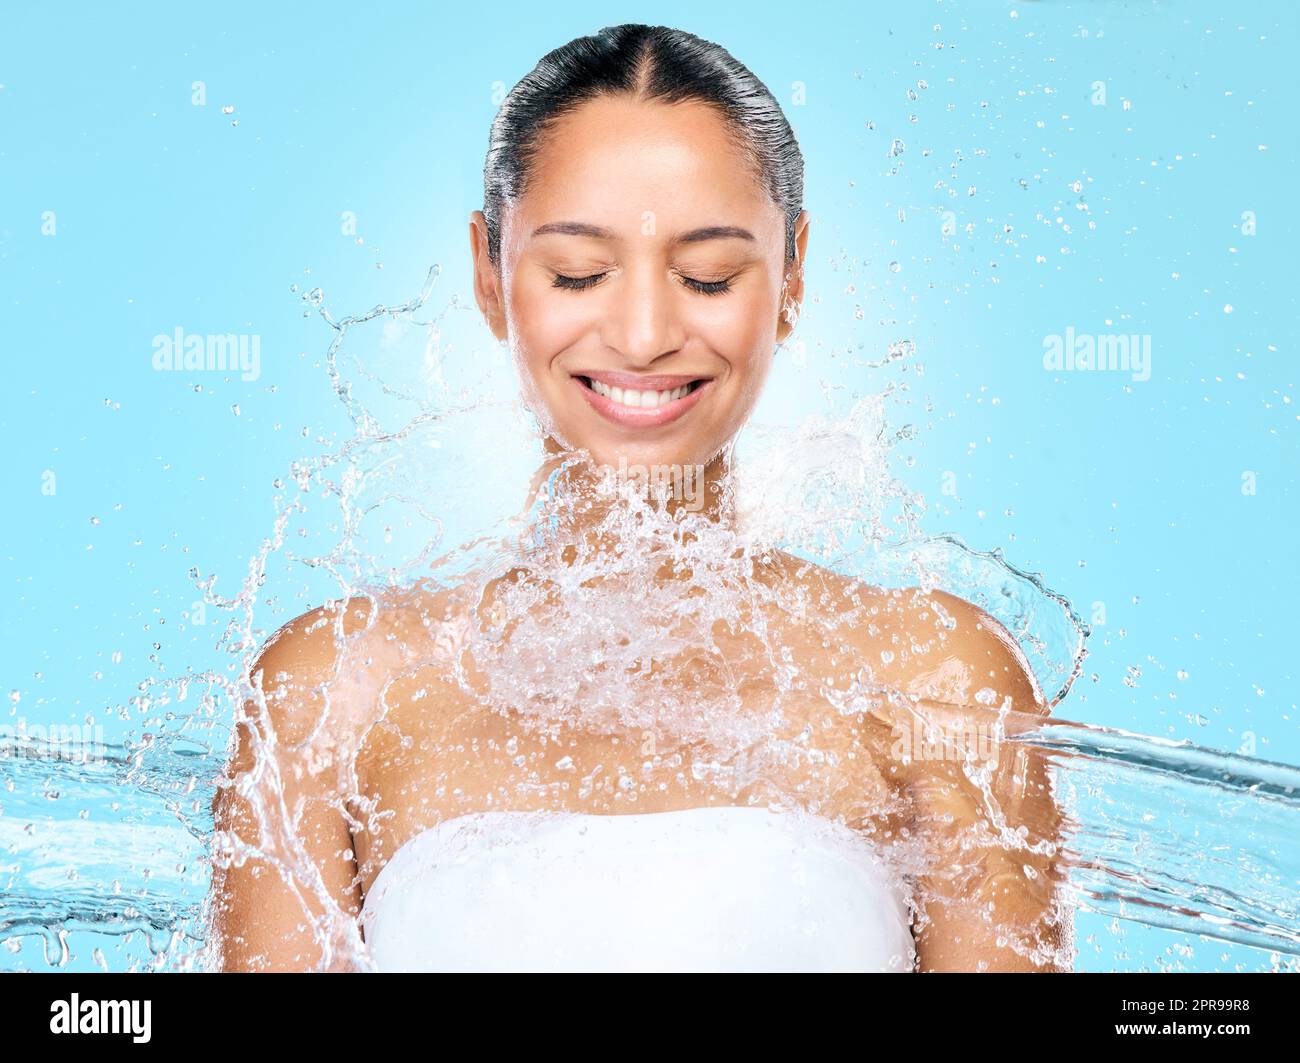 Always practice good hygiene. Studio shot of clean water splashing against a woman. Stock Photo